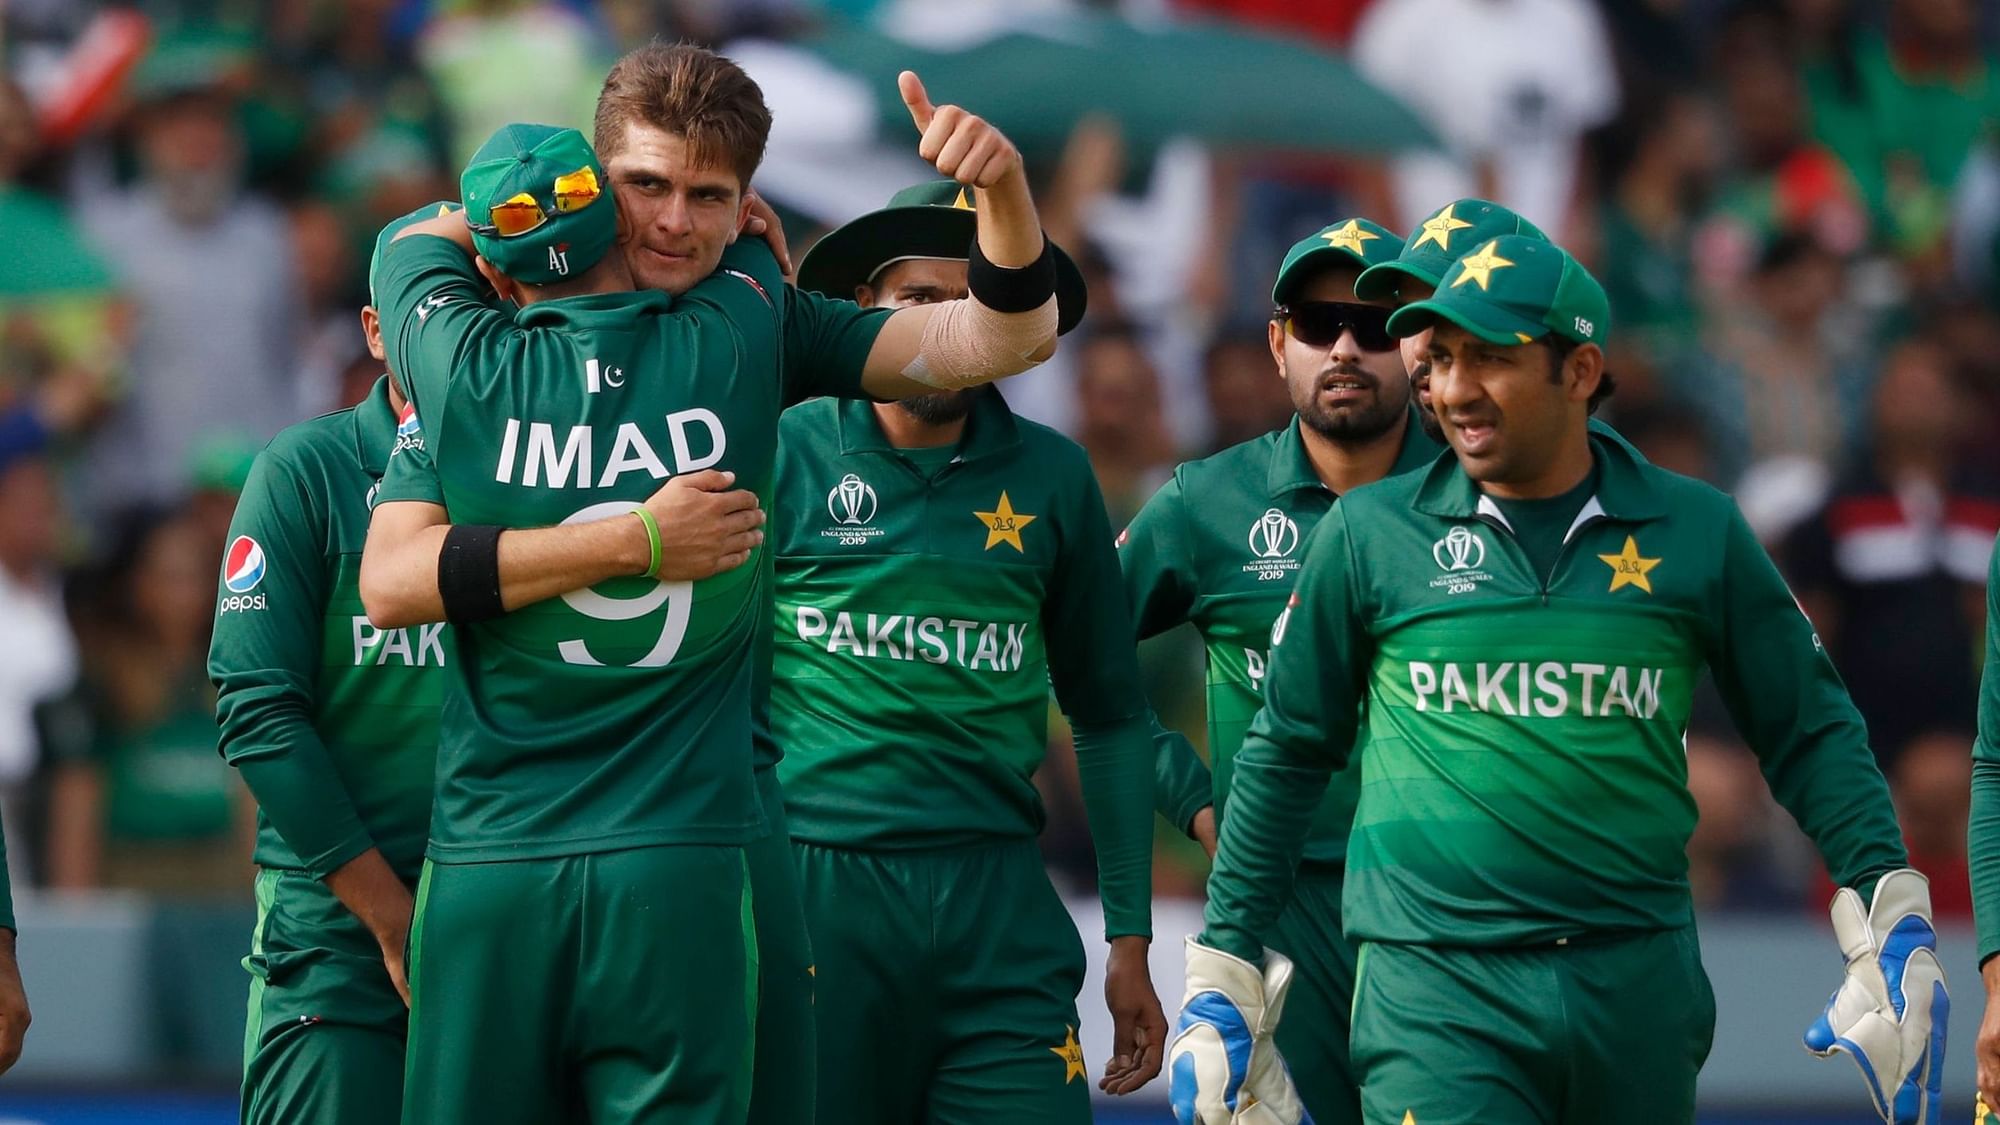 Shaheen Shah picked up six wickets as Pakistan beat Bangladesh by 94 runs at Lord’s.